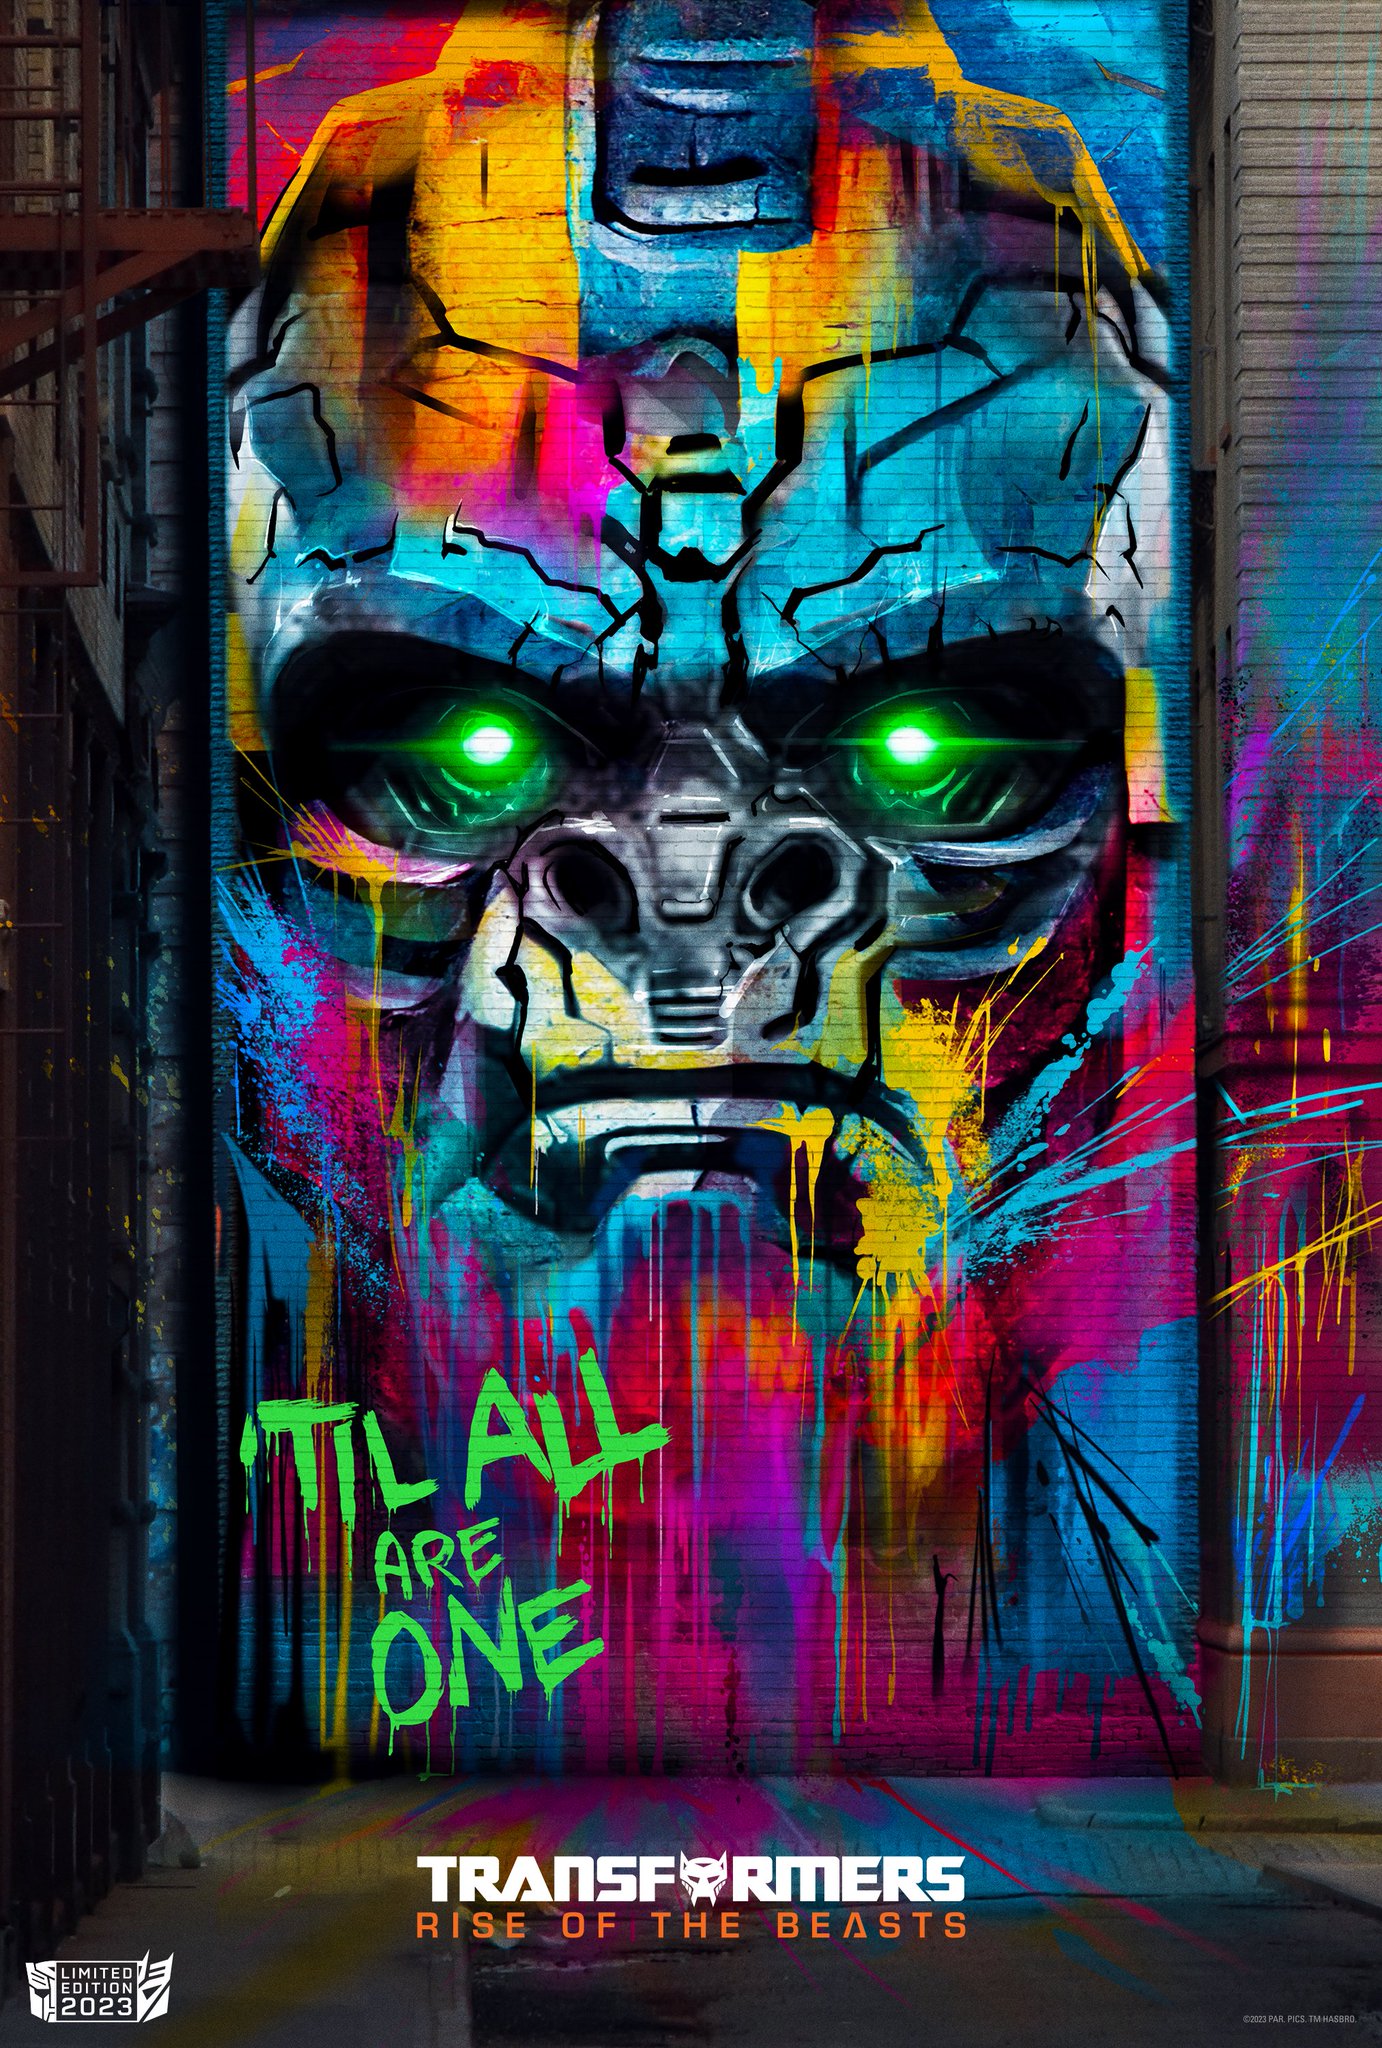 Creatieve posters van Transformers Rise of the Beasts